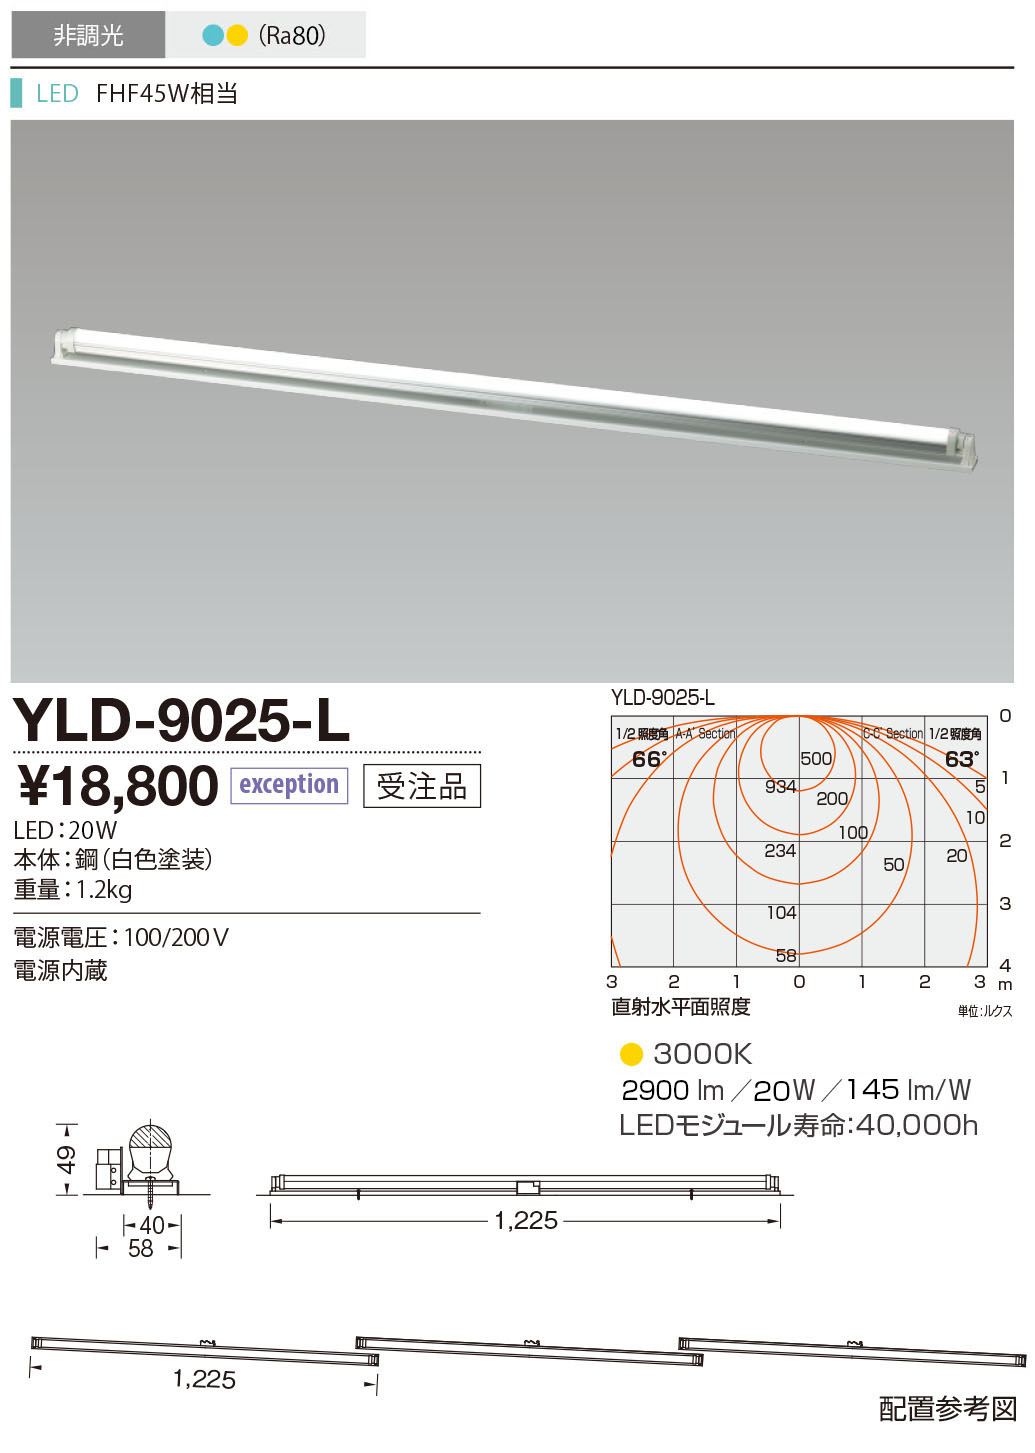 YLD-9025-L(山田照明) 商品詳細 ～ 照明器具・換気扇他、電設資材販売のブライト